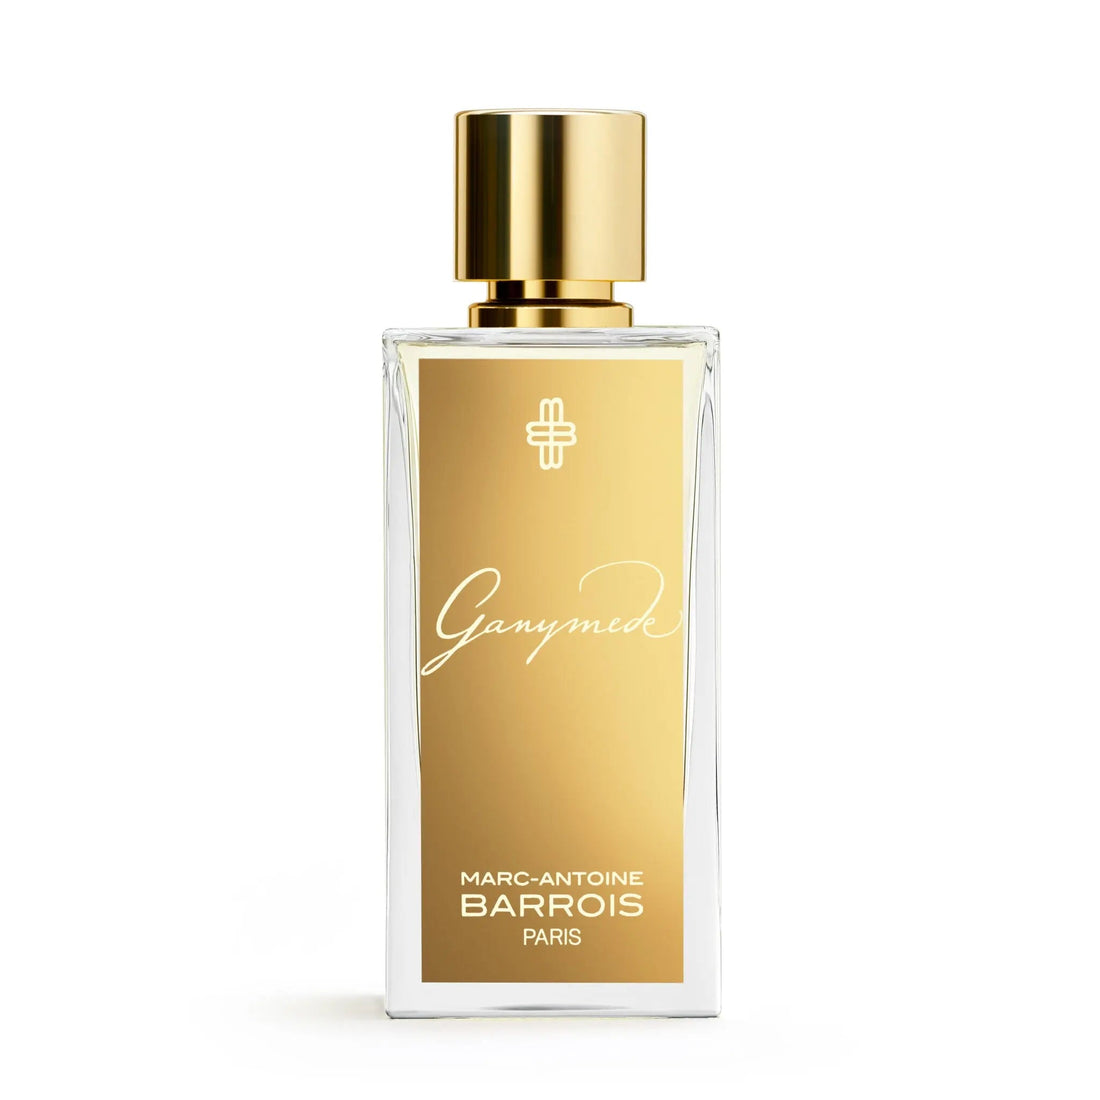 Barrois Ganymede eau de parfum - 30 ml